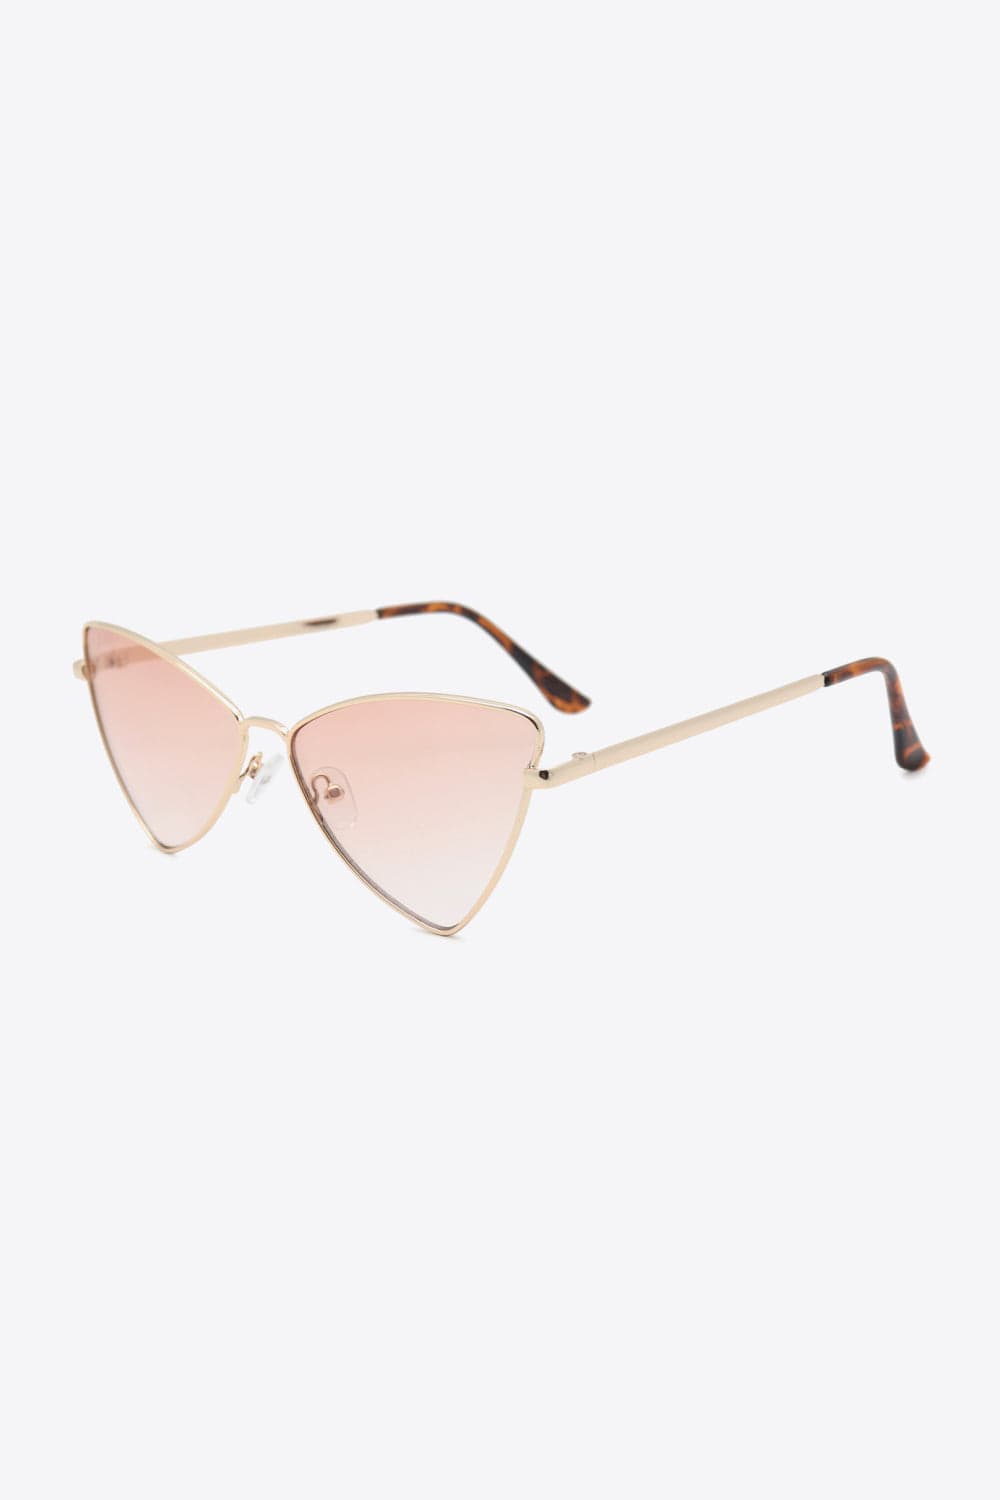 The802Gypsy sunglasses Chestnut / One Size GYPSY-Metal Frame Cat-Eye Sunglasses